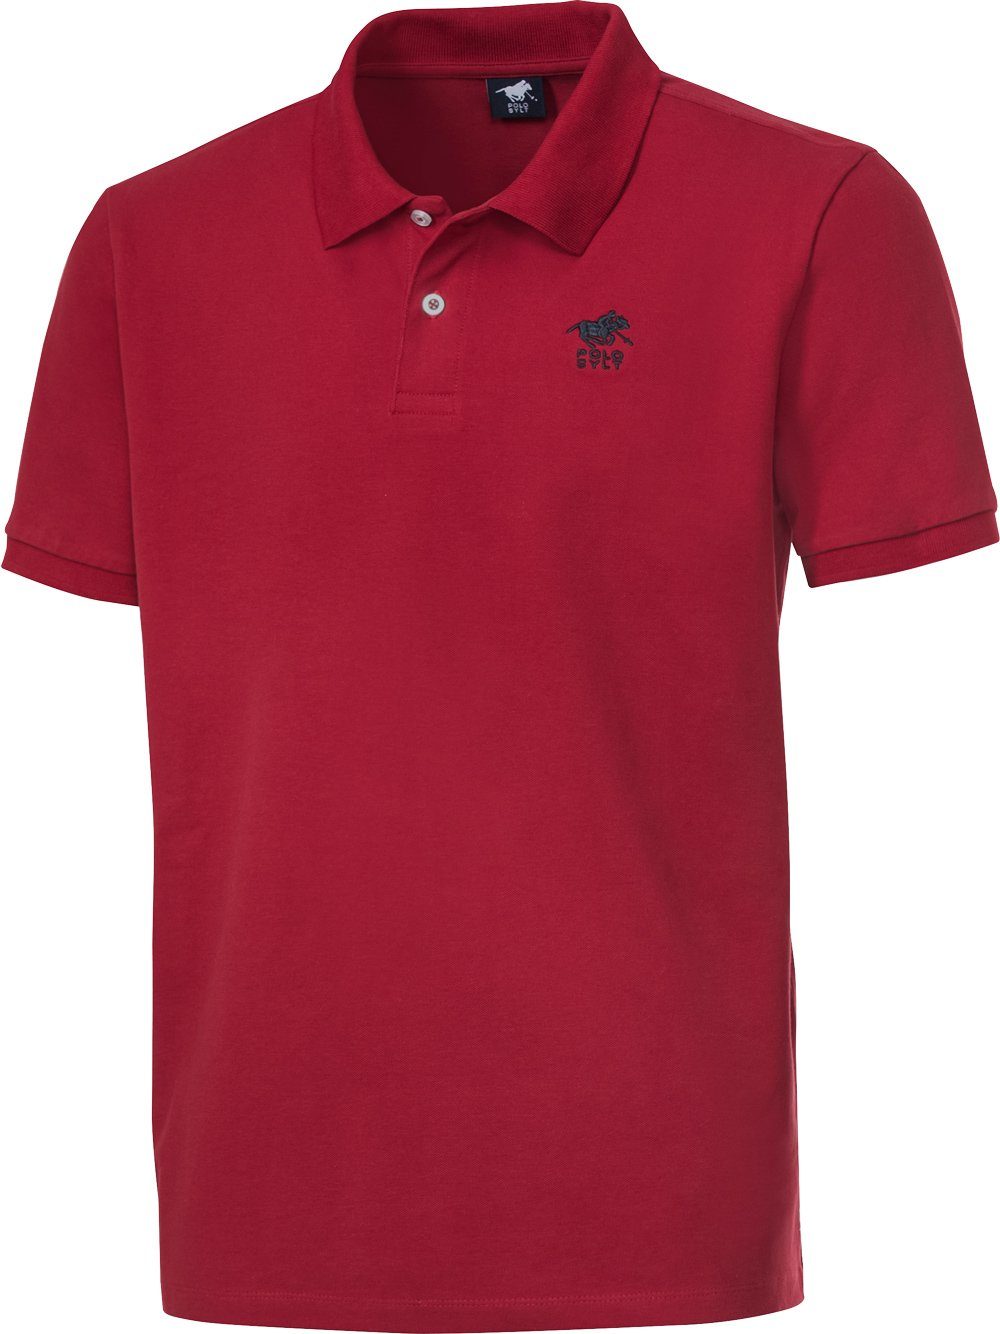 Polo Sylt Poloshirt elegant-sportive Optik in leuchtenden Trendfarben rot